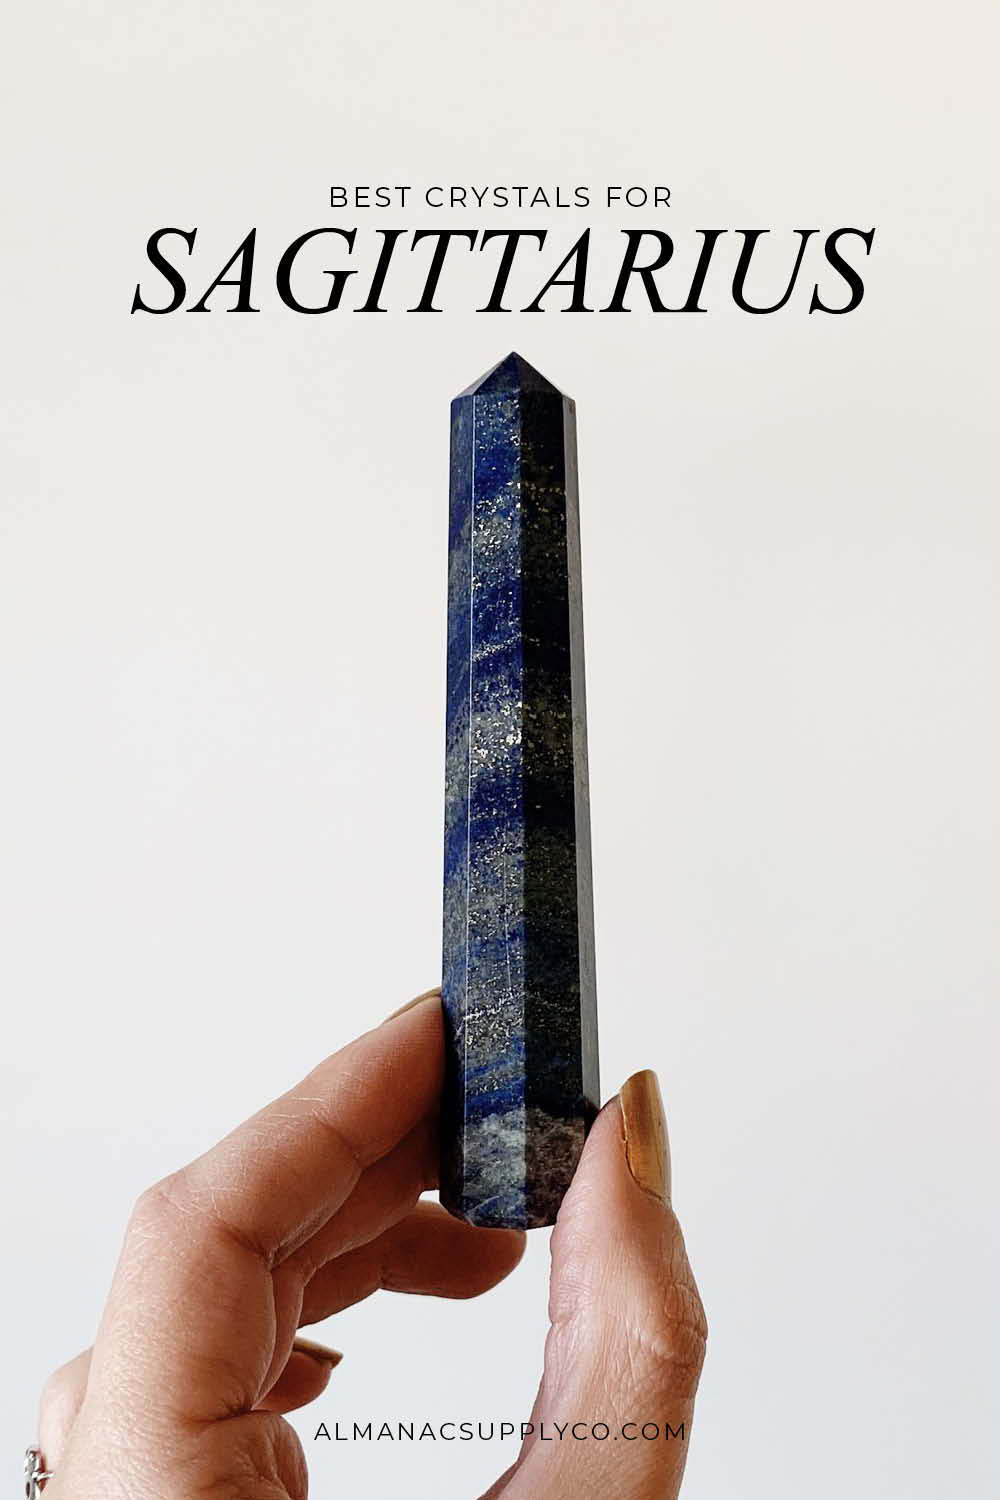 The Best Crystals for Sagittarius